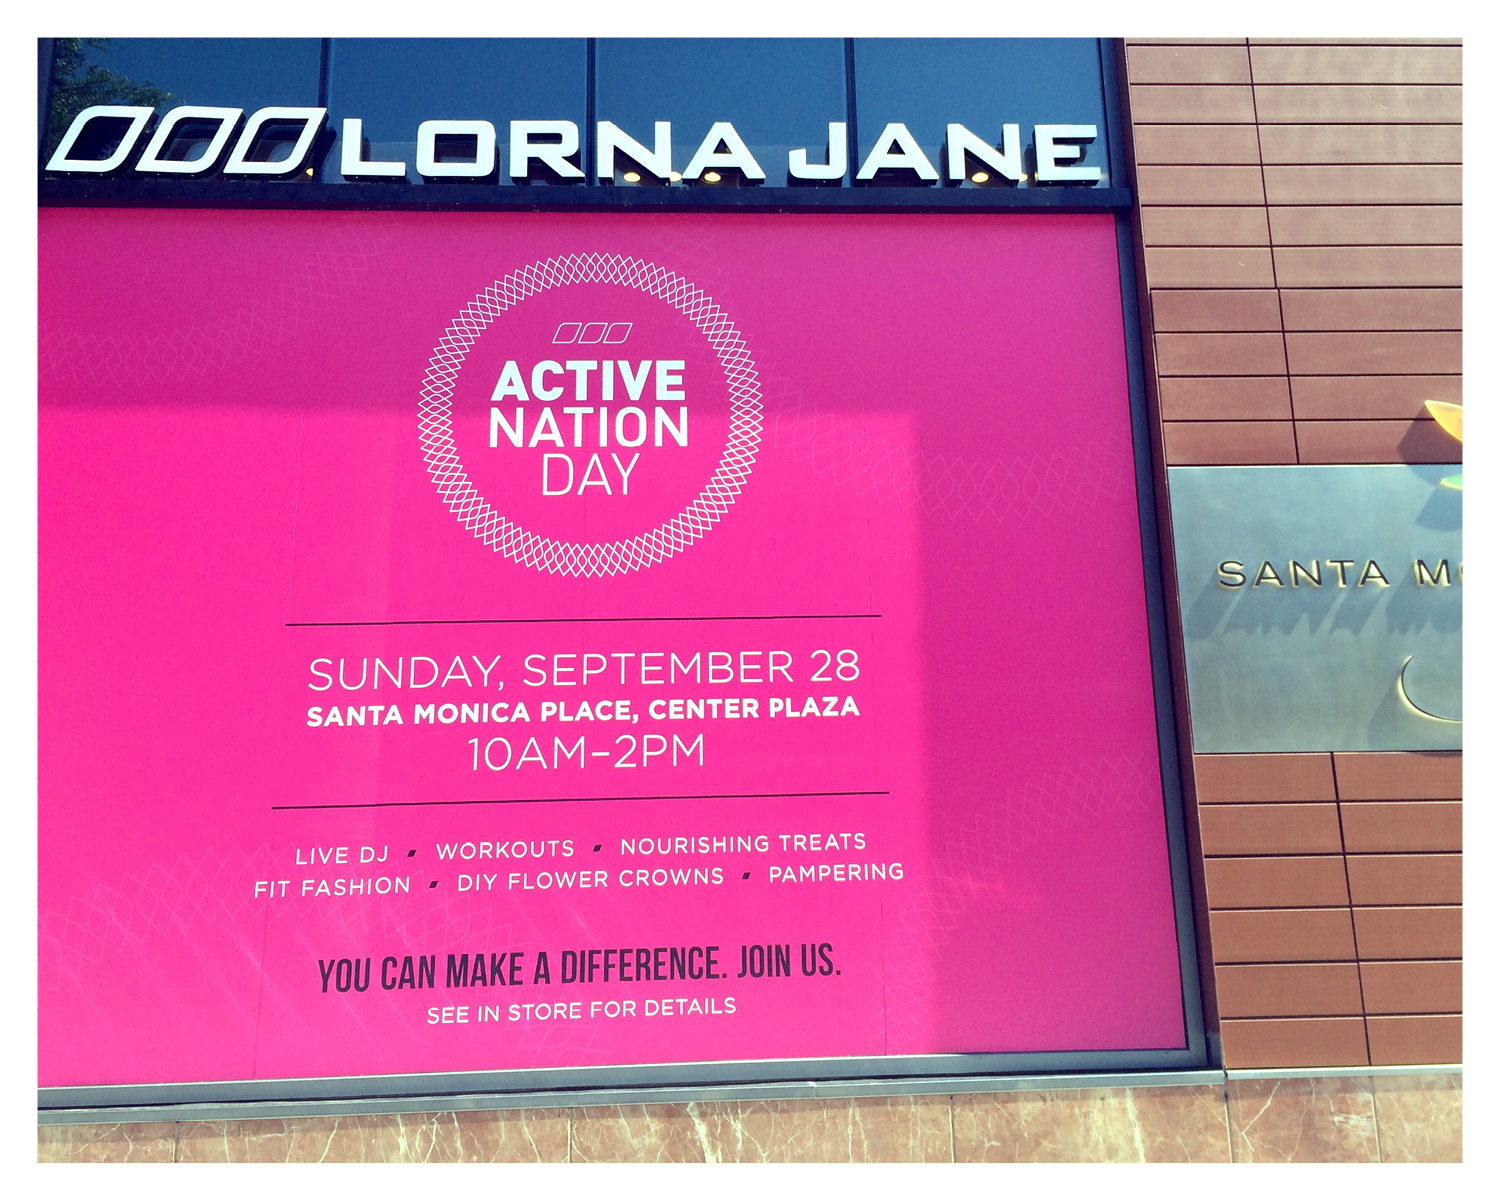  Lorna Jane Active Nation Day Window Graphic, Santa Monica Place (2014) 